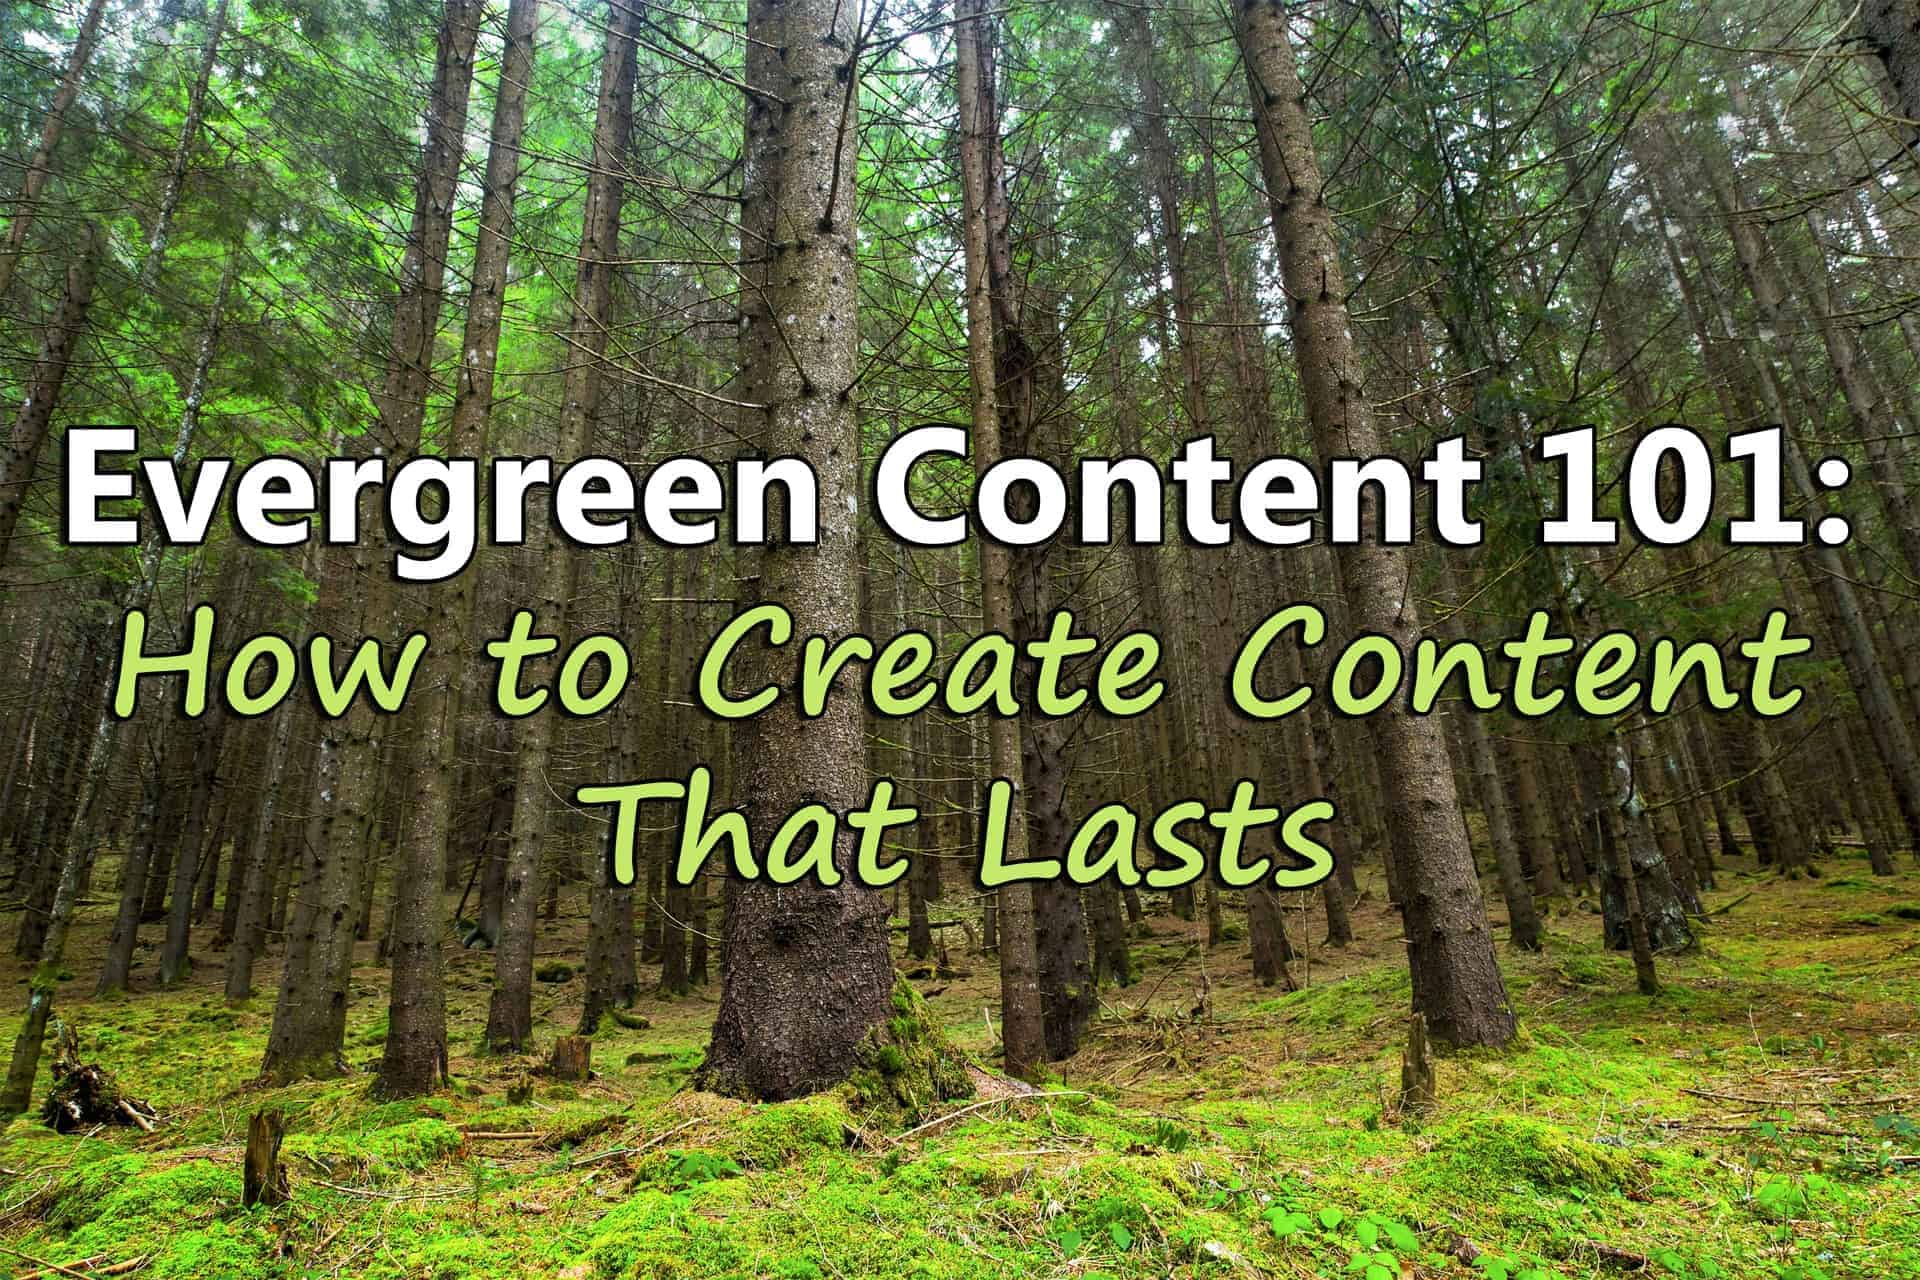 How to repurpose evergreen content